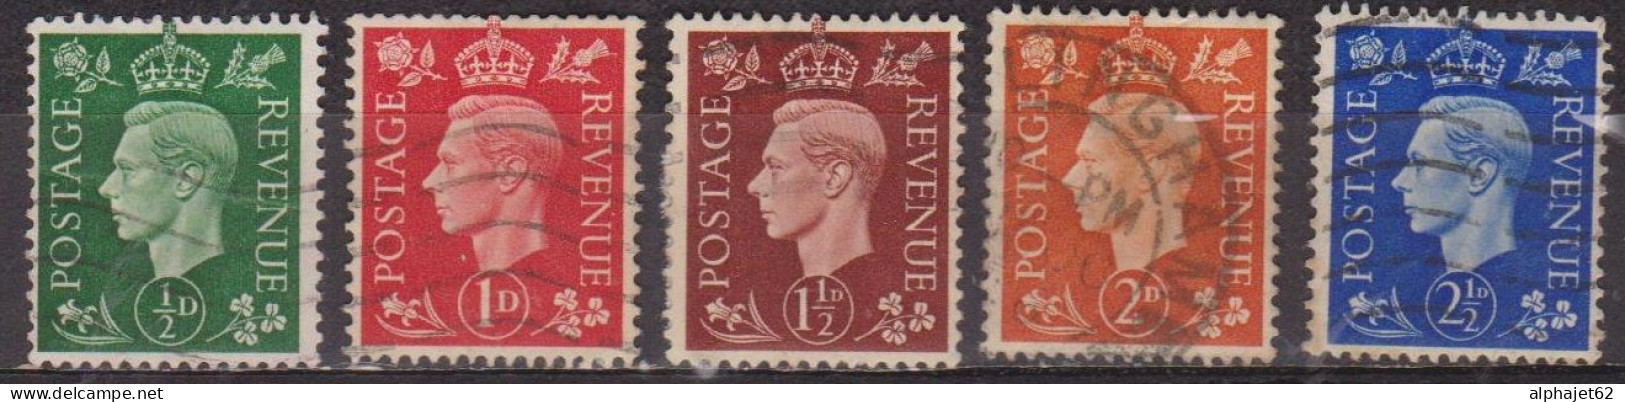 Avènement Du Roi George VI - GRANDE BRETAGNE - 1937 - N° 209 à 213 - Used Stamps